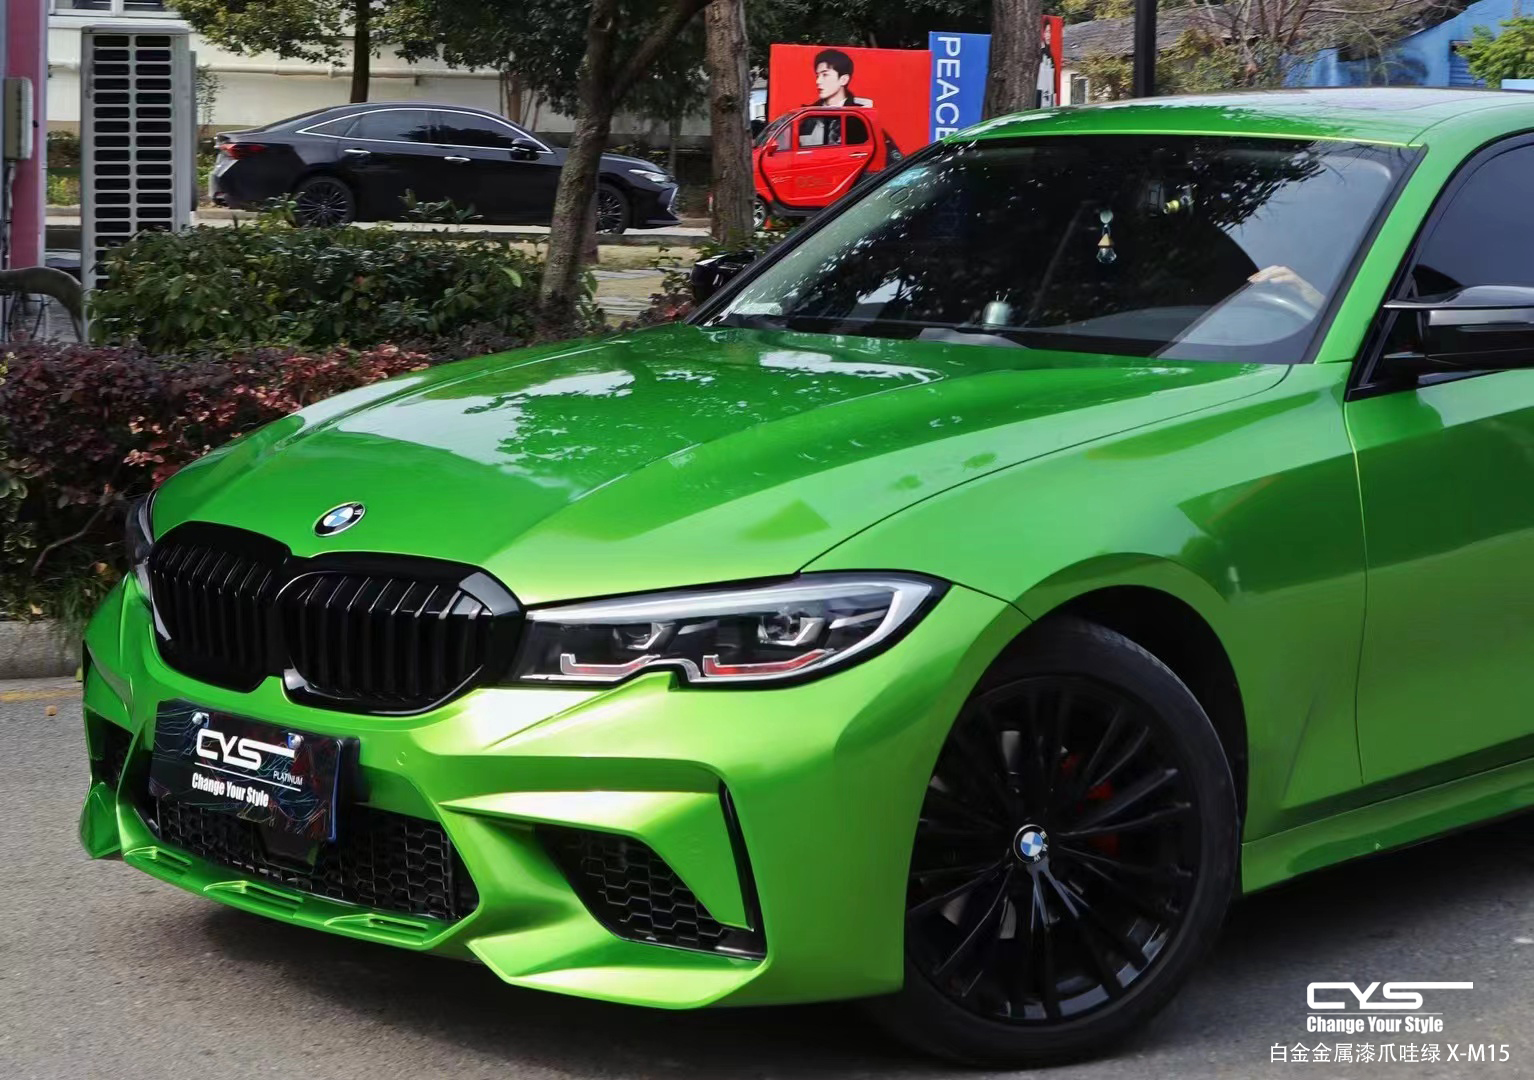 X-M15 白金金属漆爪哇绿 | BMW3系